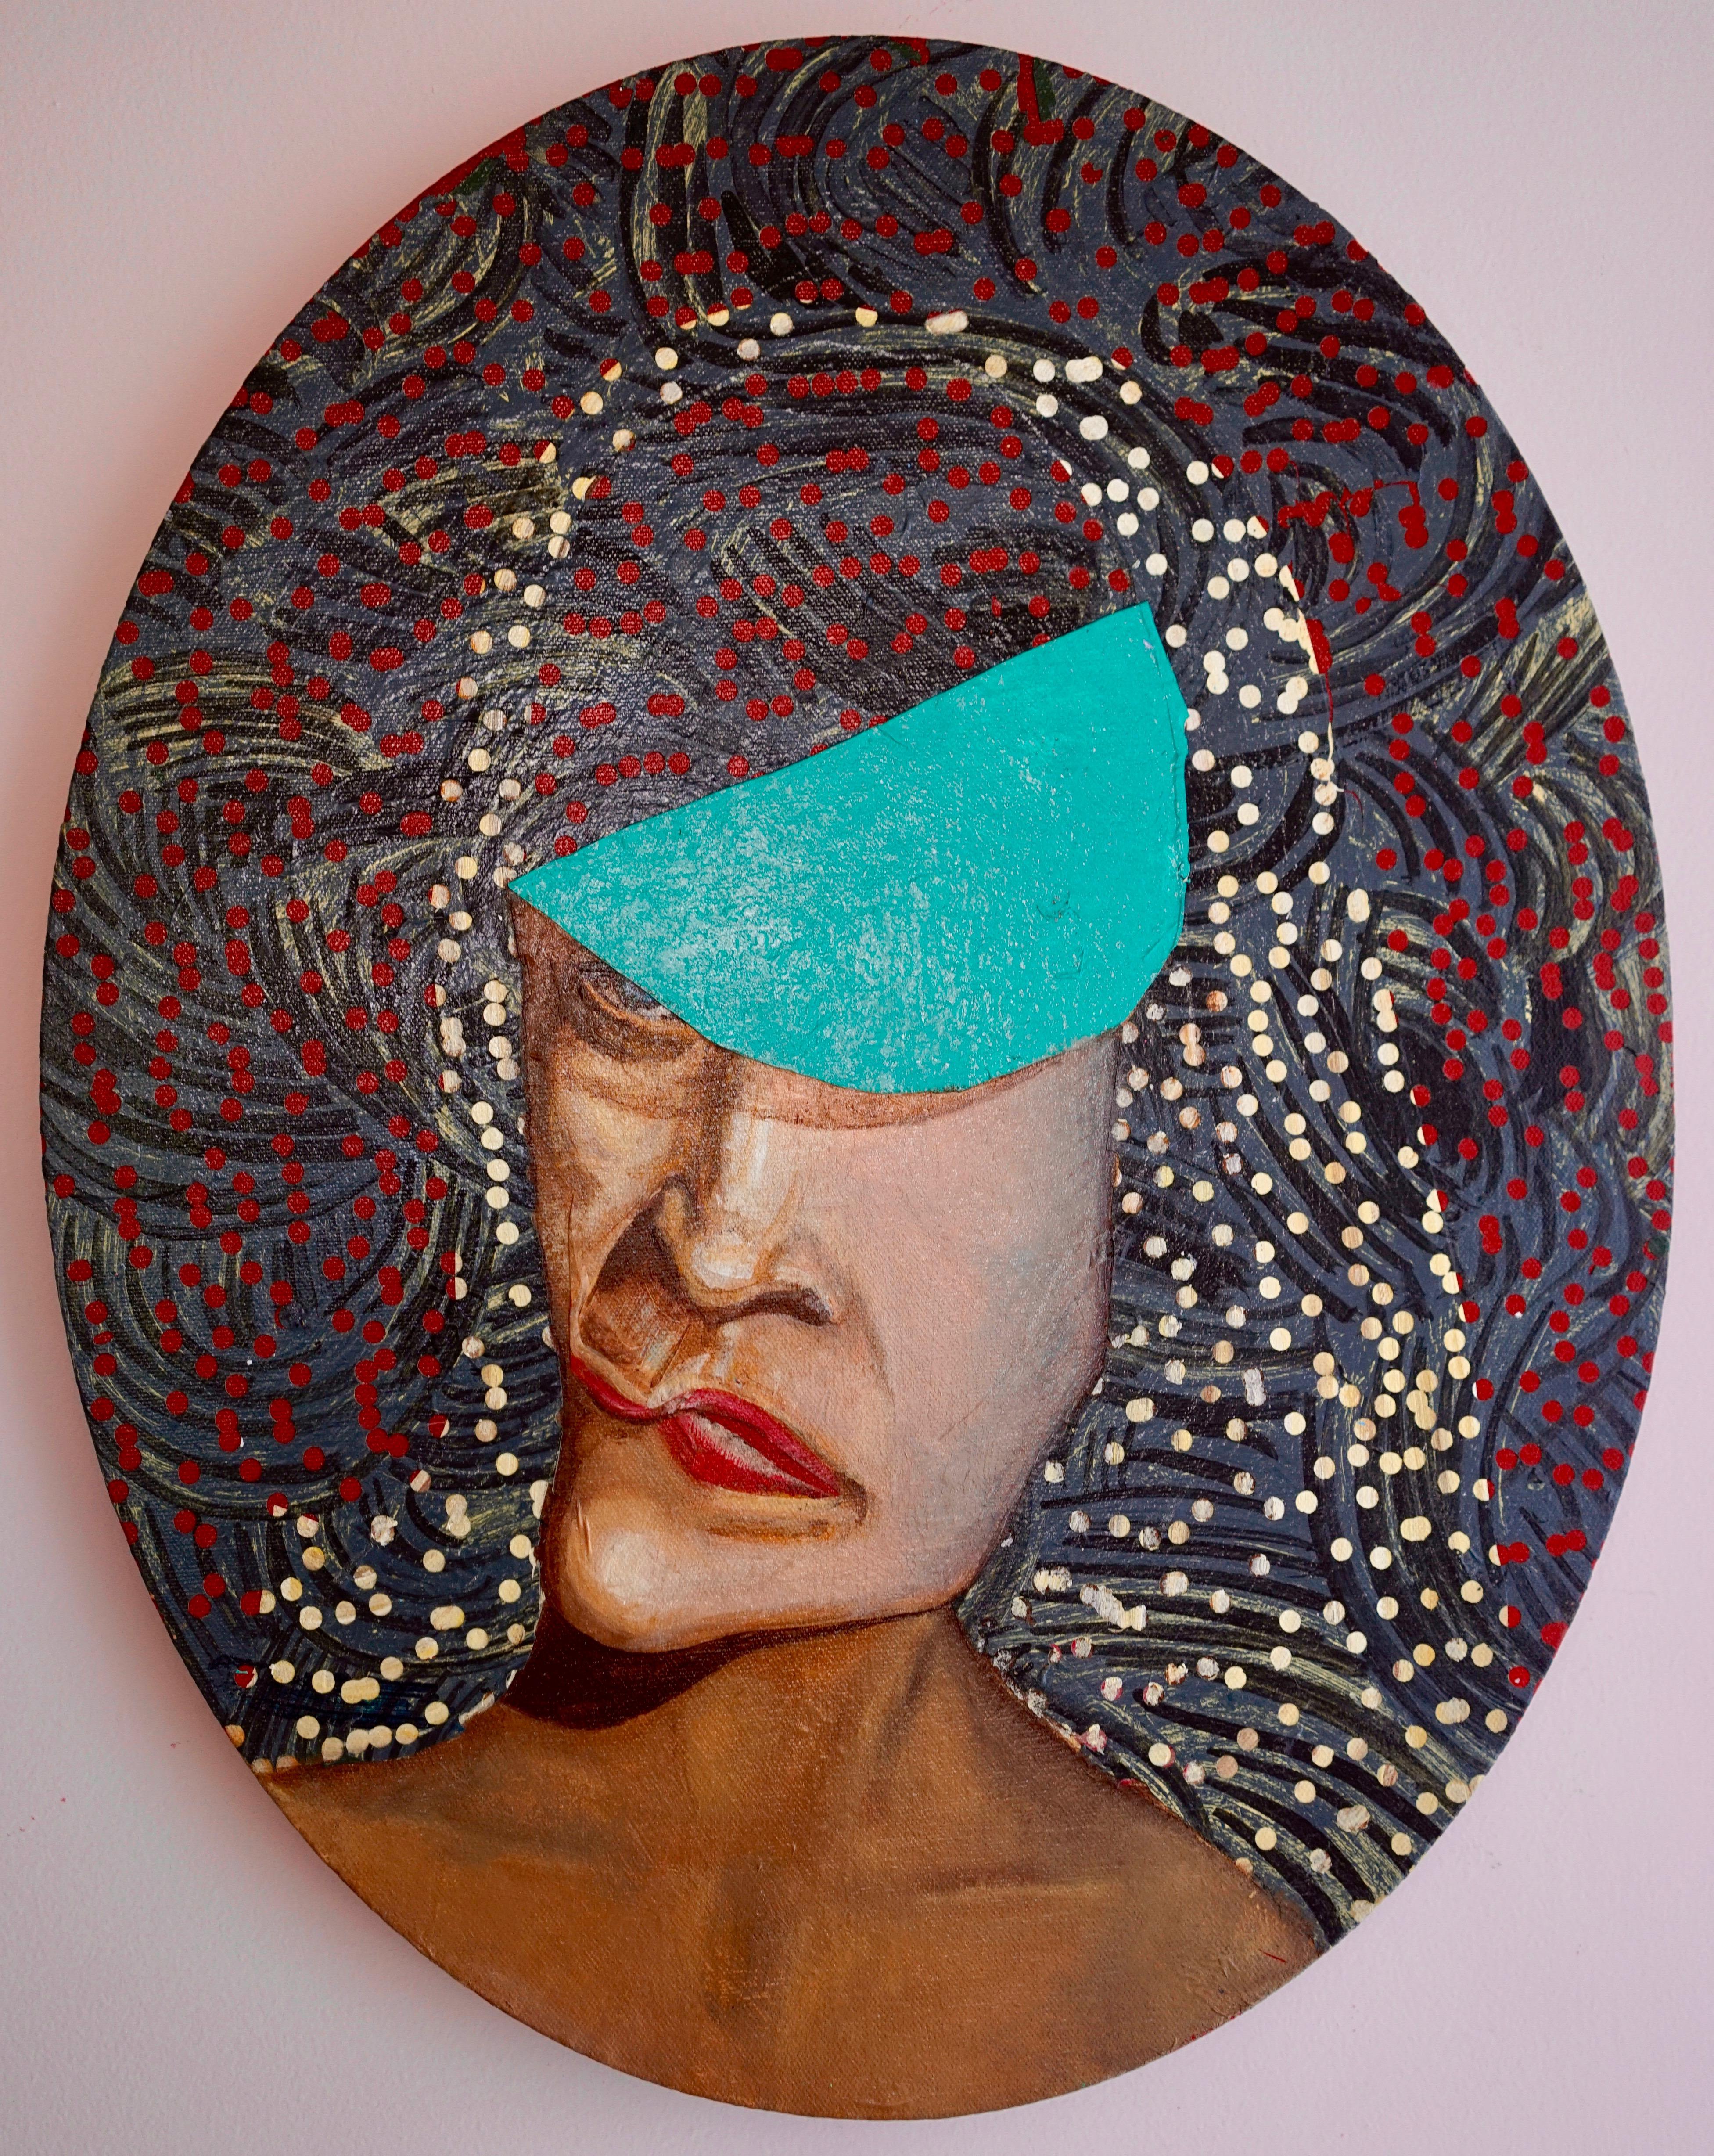 Daniel Dejean Portrait Painting - Oval Portrait of a Woman